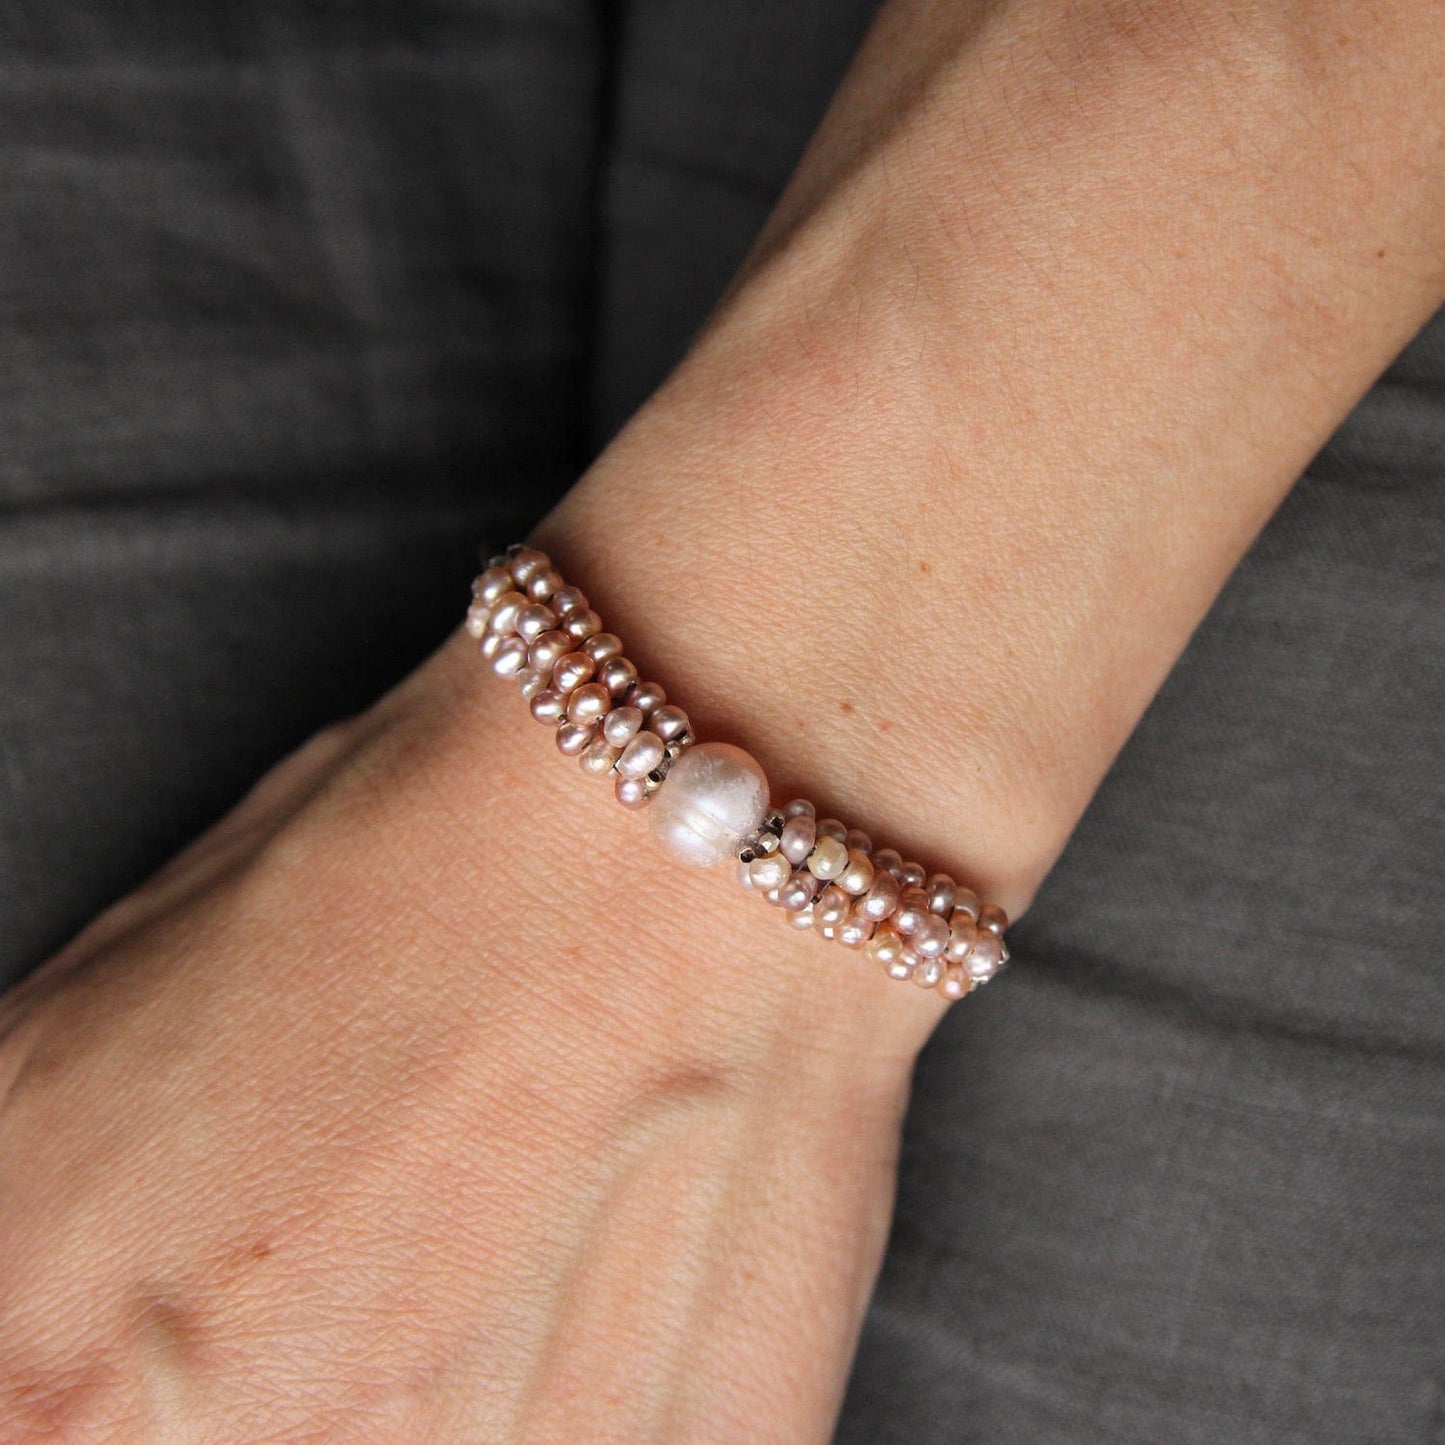 BRC-JM Hand Stitched Pale Pink Pearl Bracelet